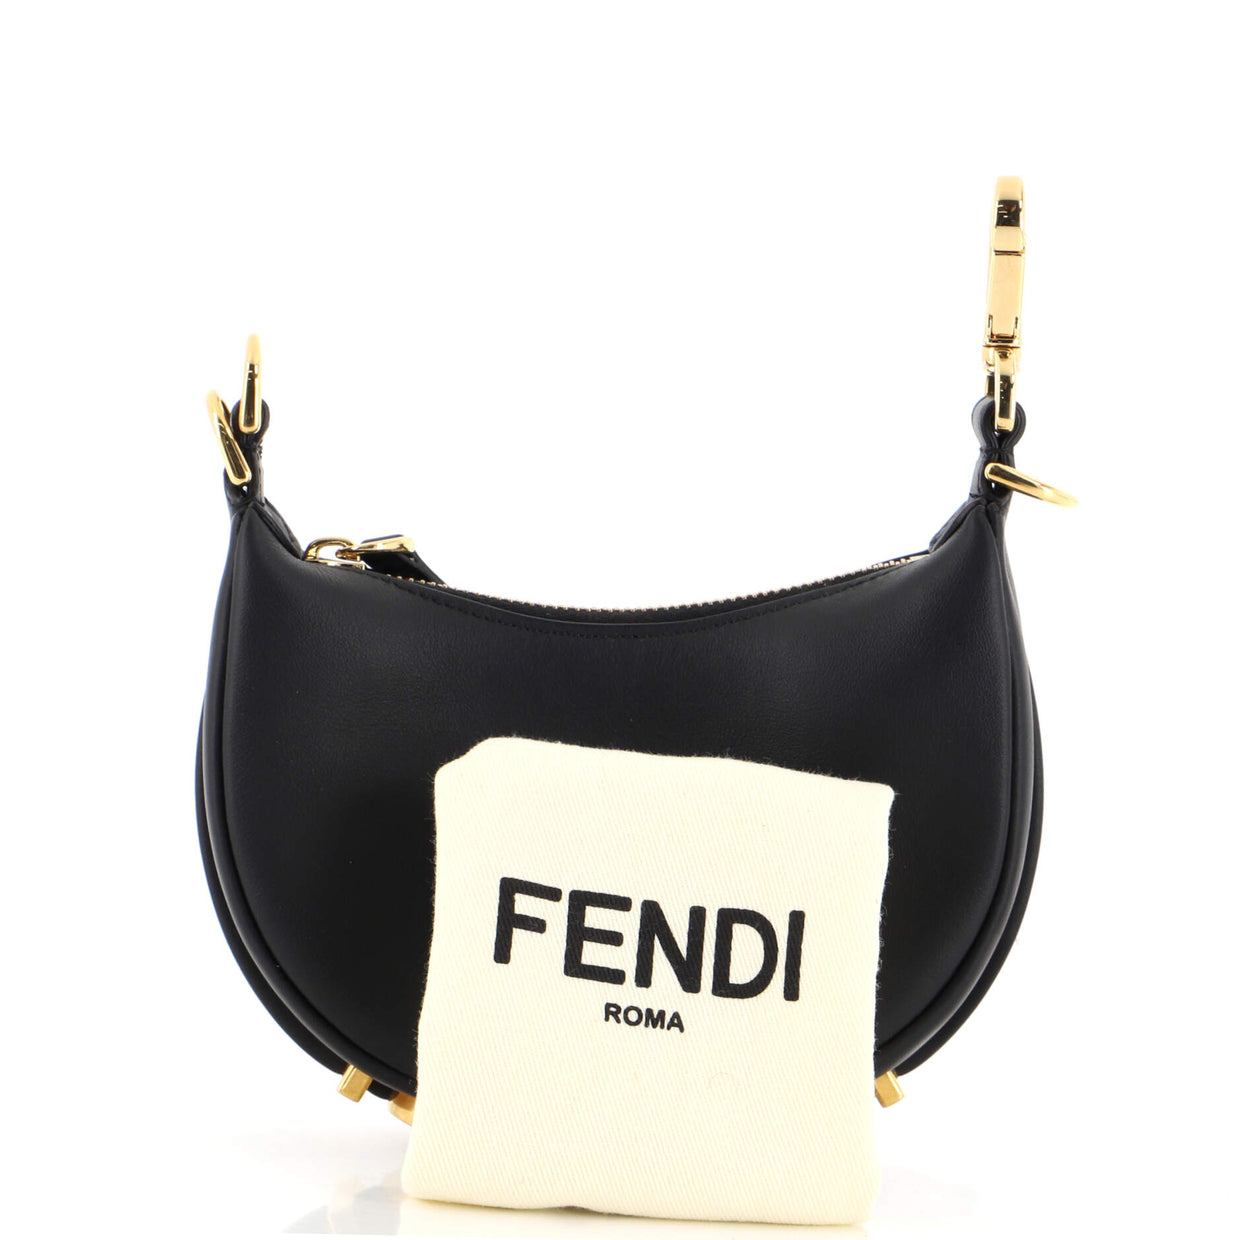 Fendi Fendigraphy Bag Leather Nano Black 2014483